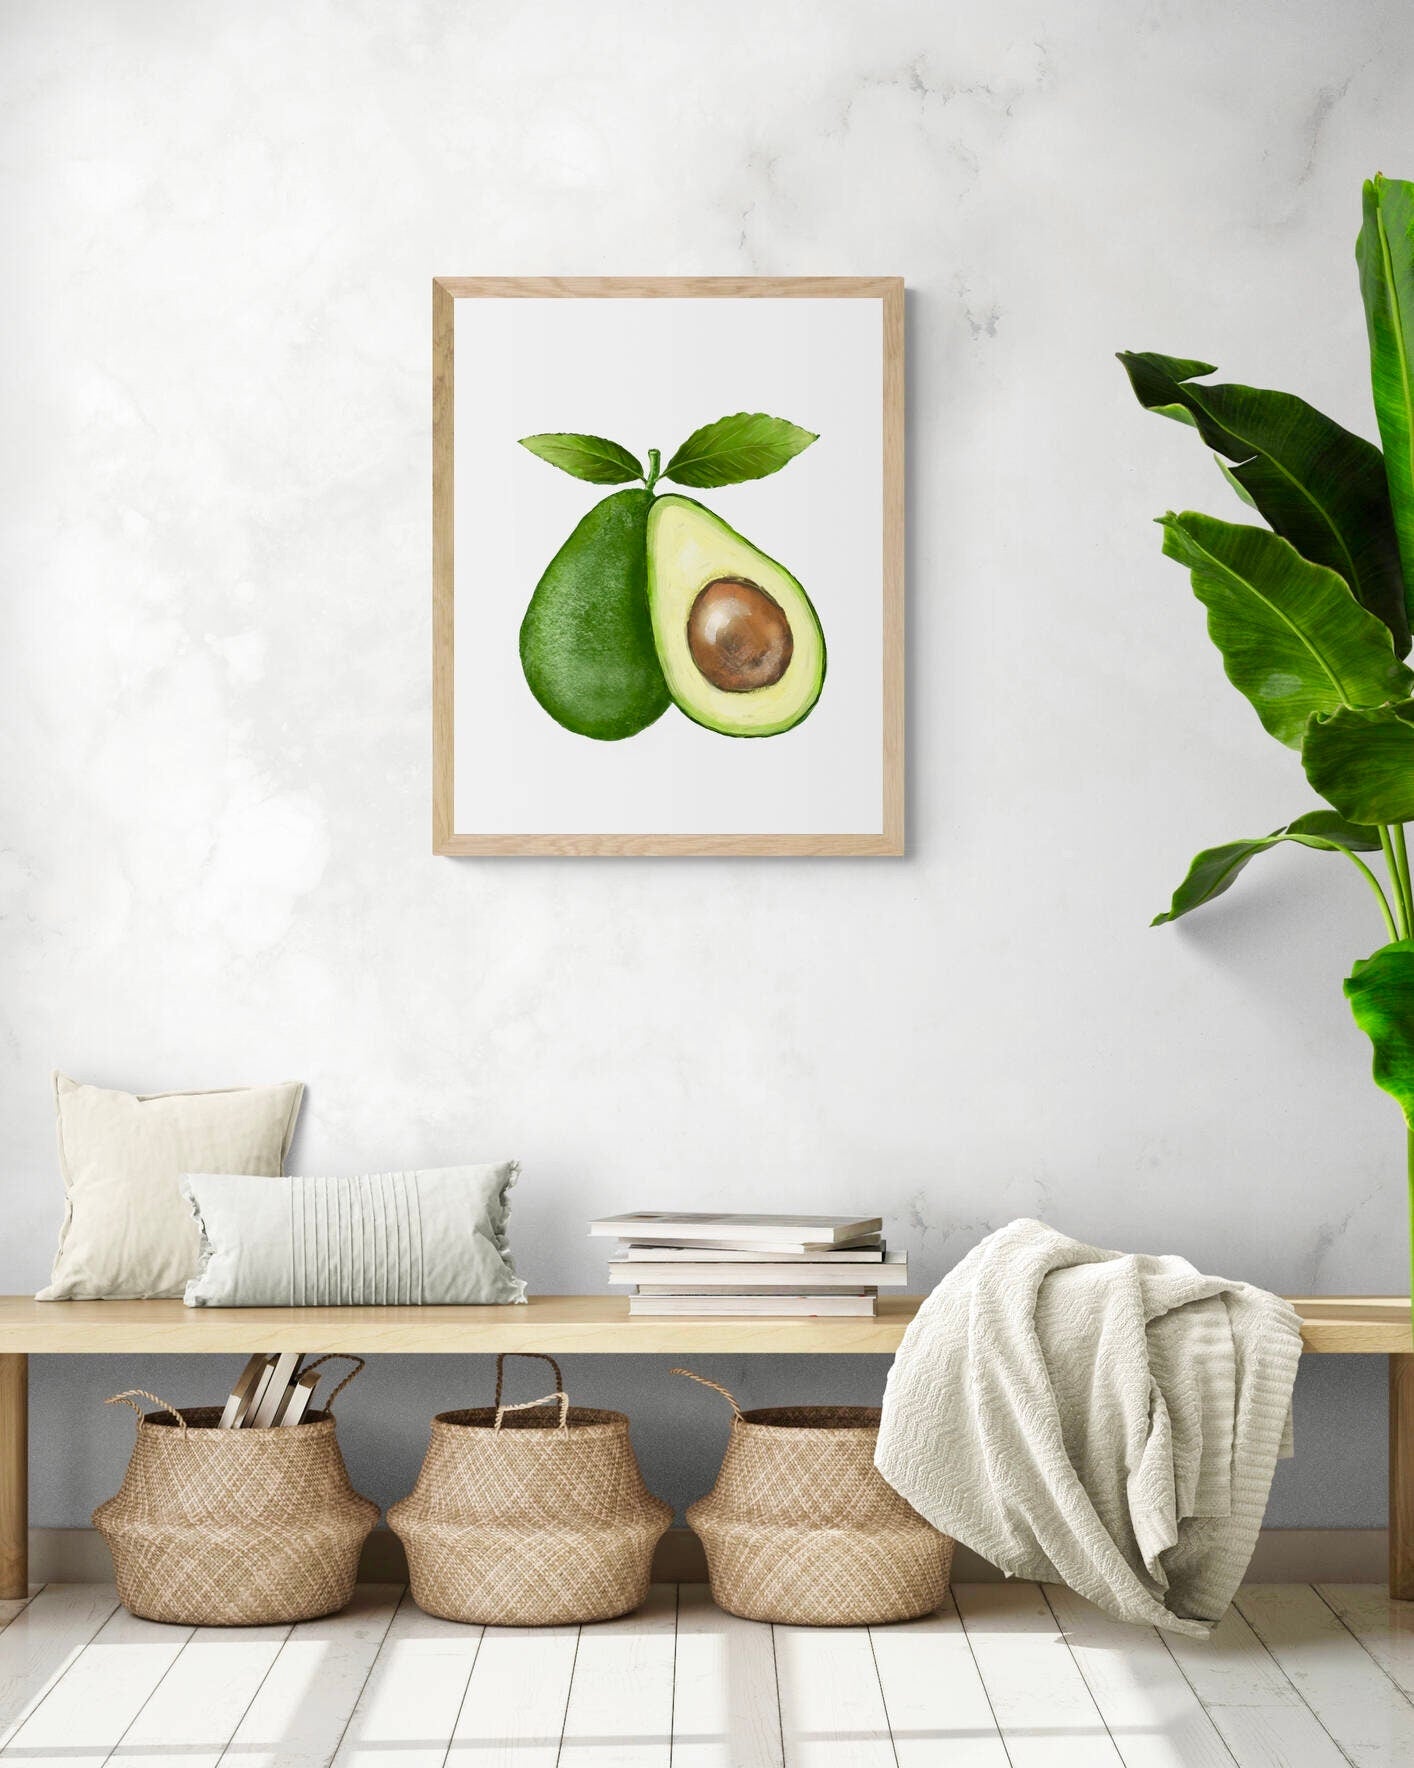 Avocado Art Print, Avocado Wall Art, Kitchen Wall Hanging, Dining Room Decor, Painting for Vegans, Fruit Illustration, Farmhouse Wall Decor